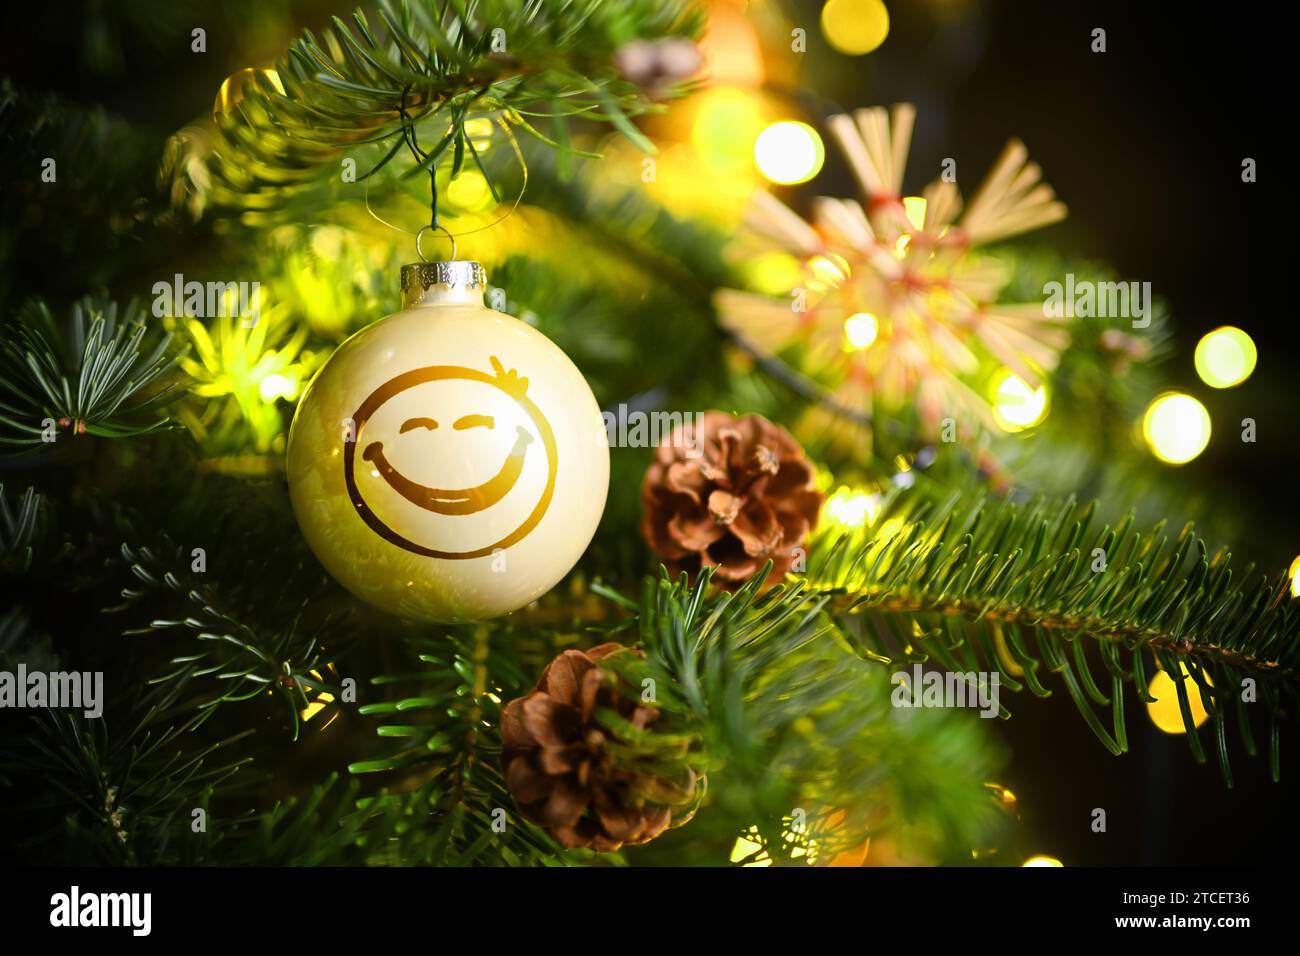 Christmas Ball With Smiley Hangs On A Christmas Tree, Photo Montage Stock Photo